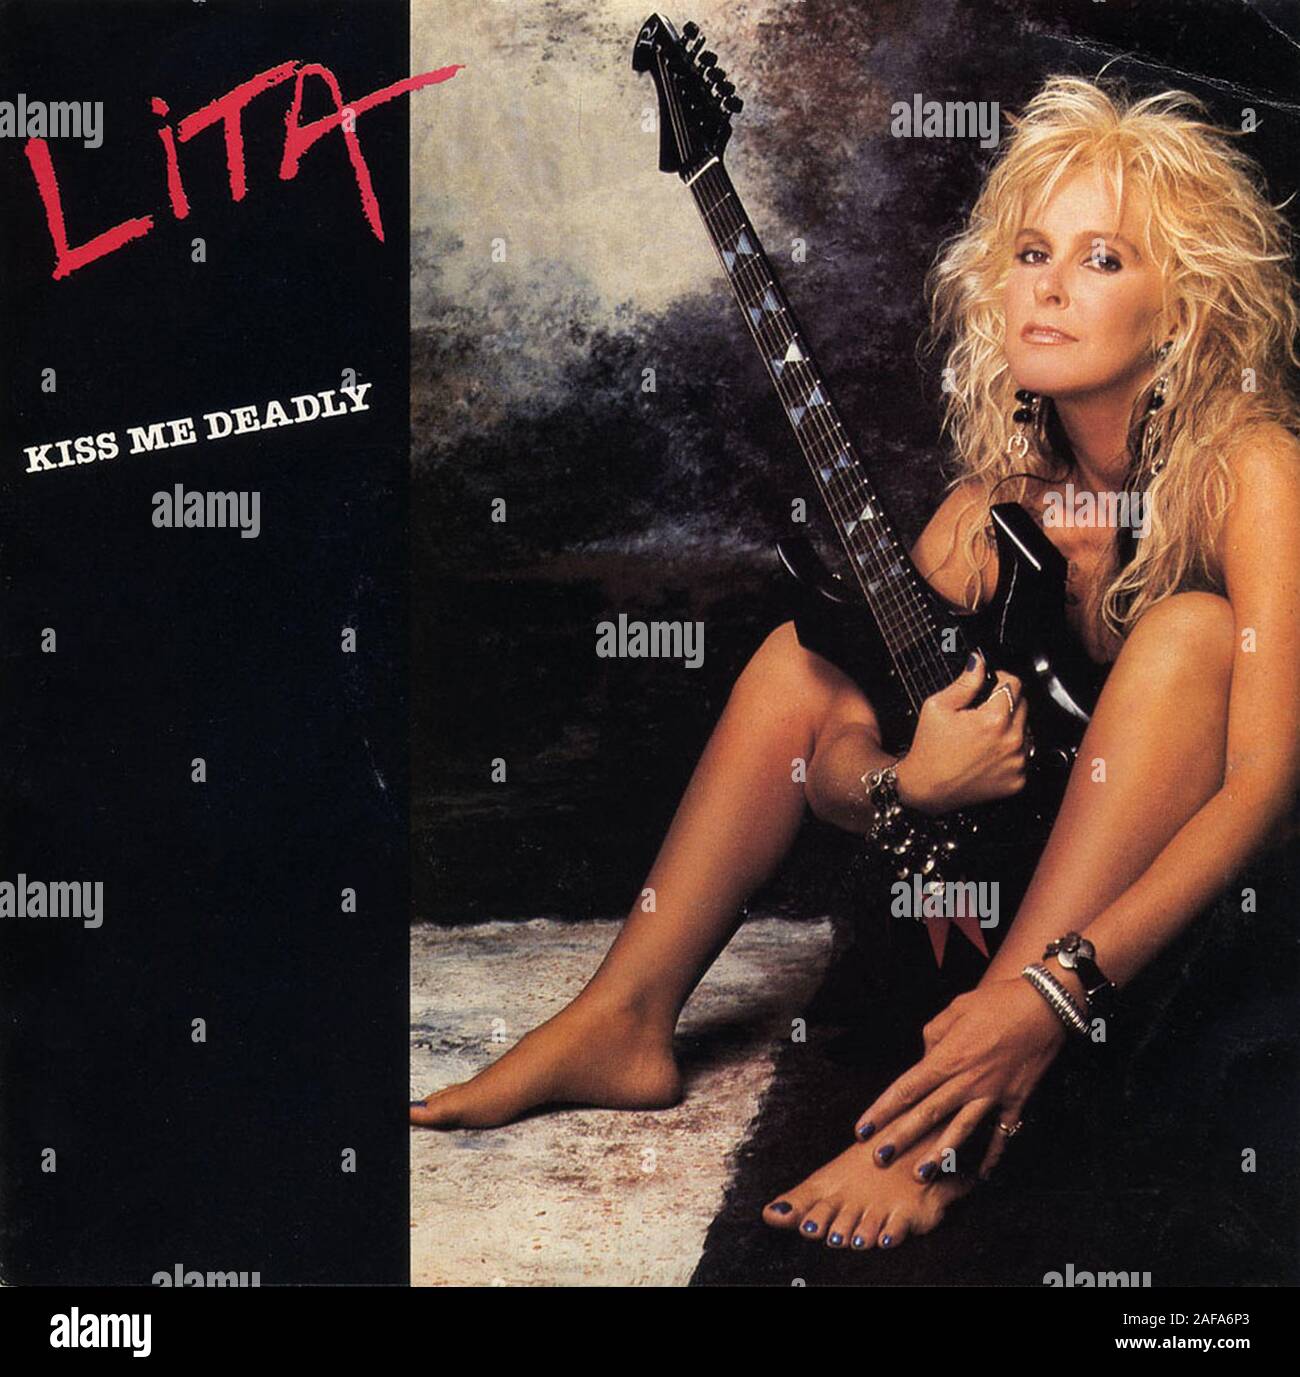 Lita Ford Kiss Me Deadly Vintage vinyl album cover Stock Photo Alamy